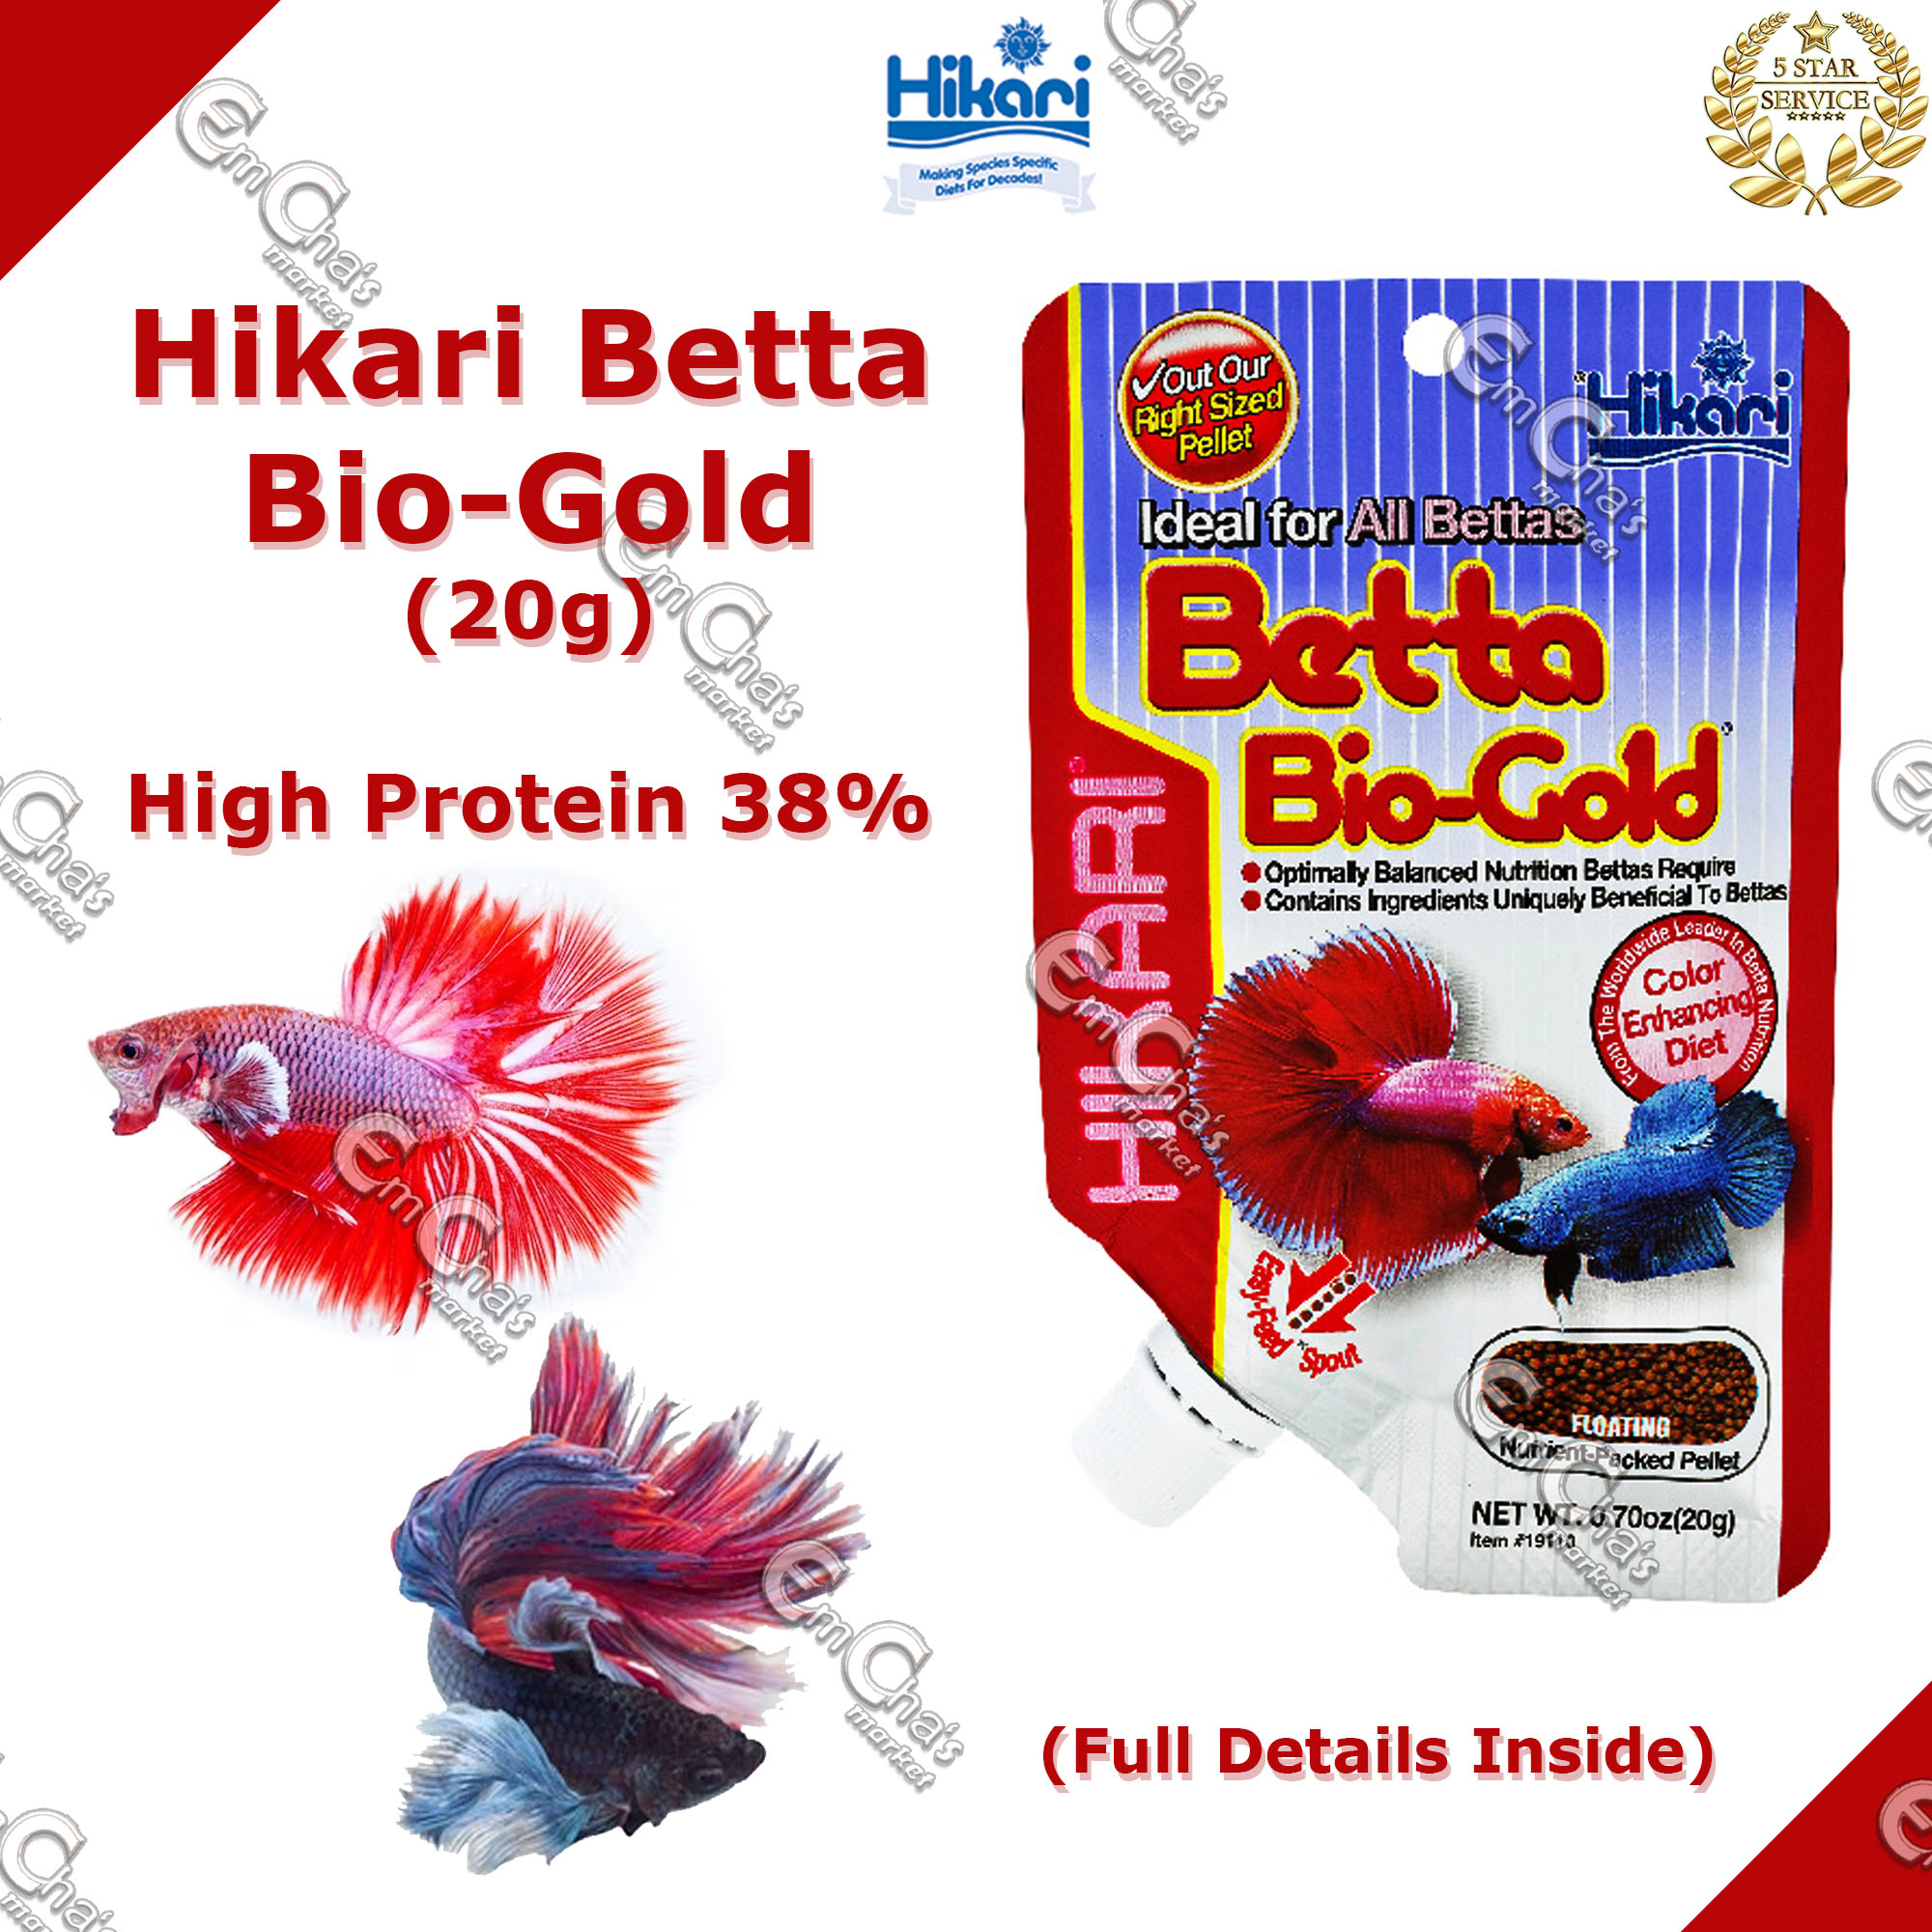 Hikari BETTA Bio Gold 20g Fish Food from Japan